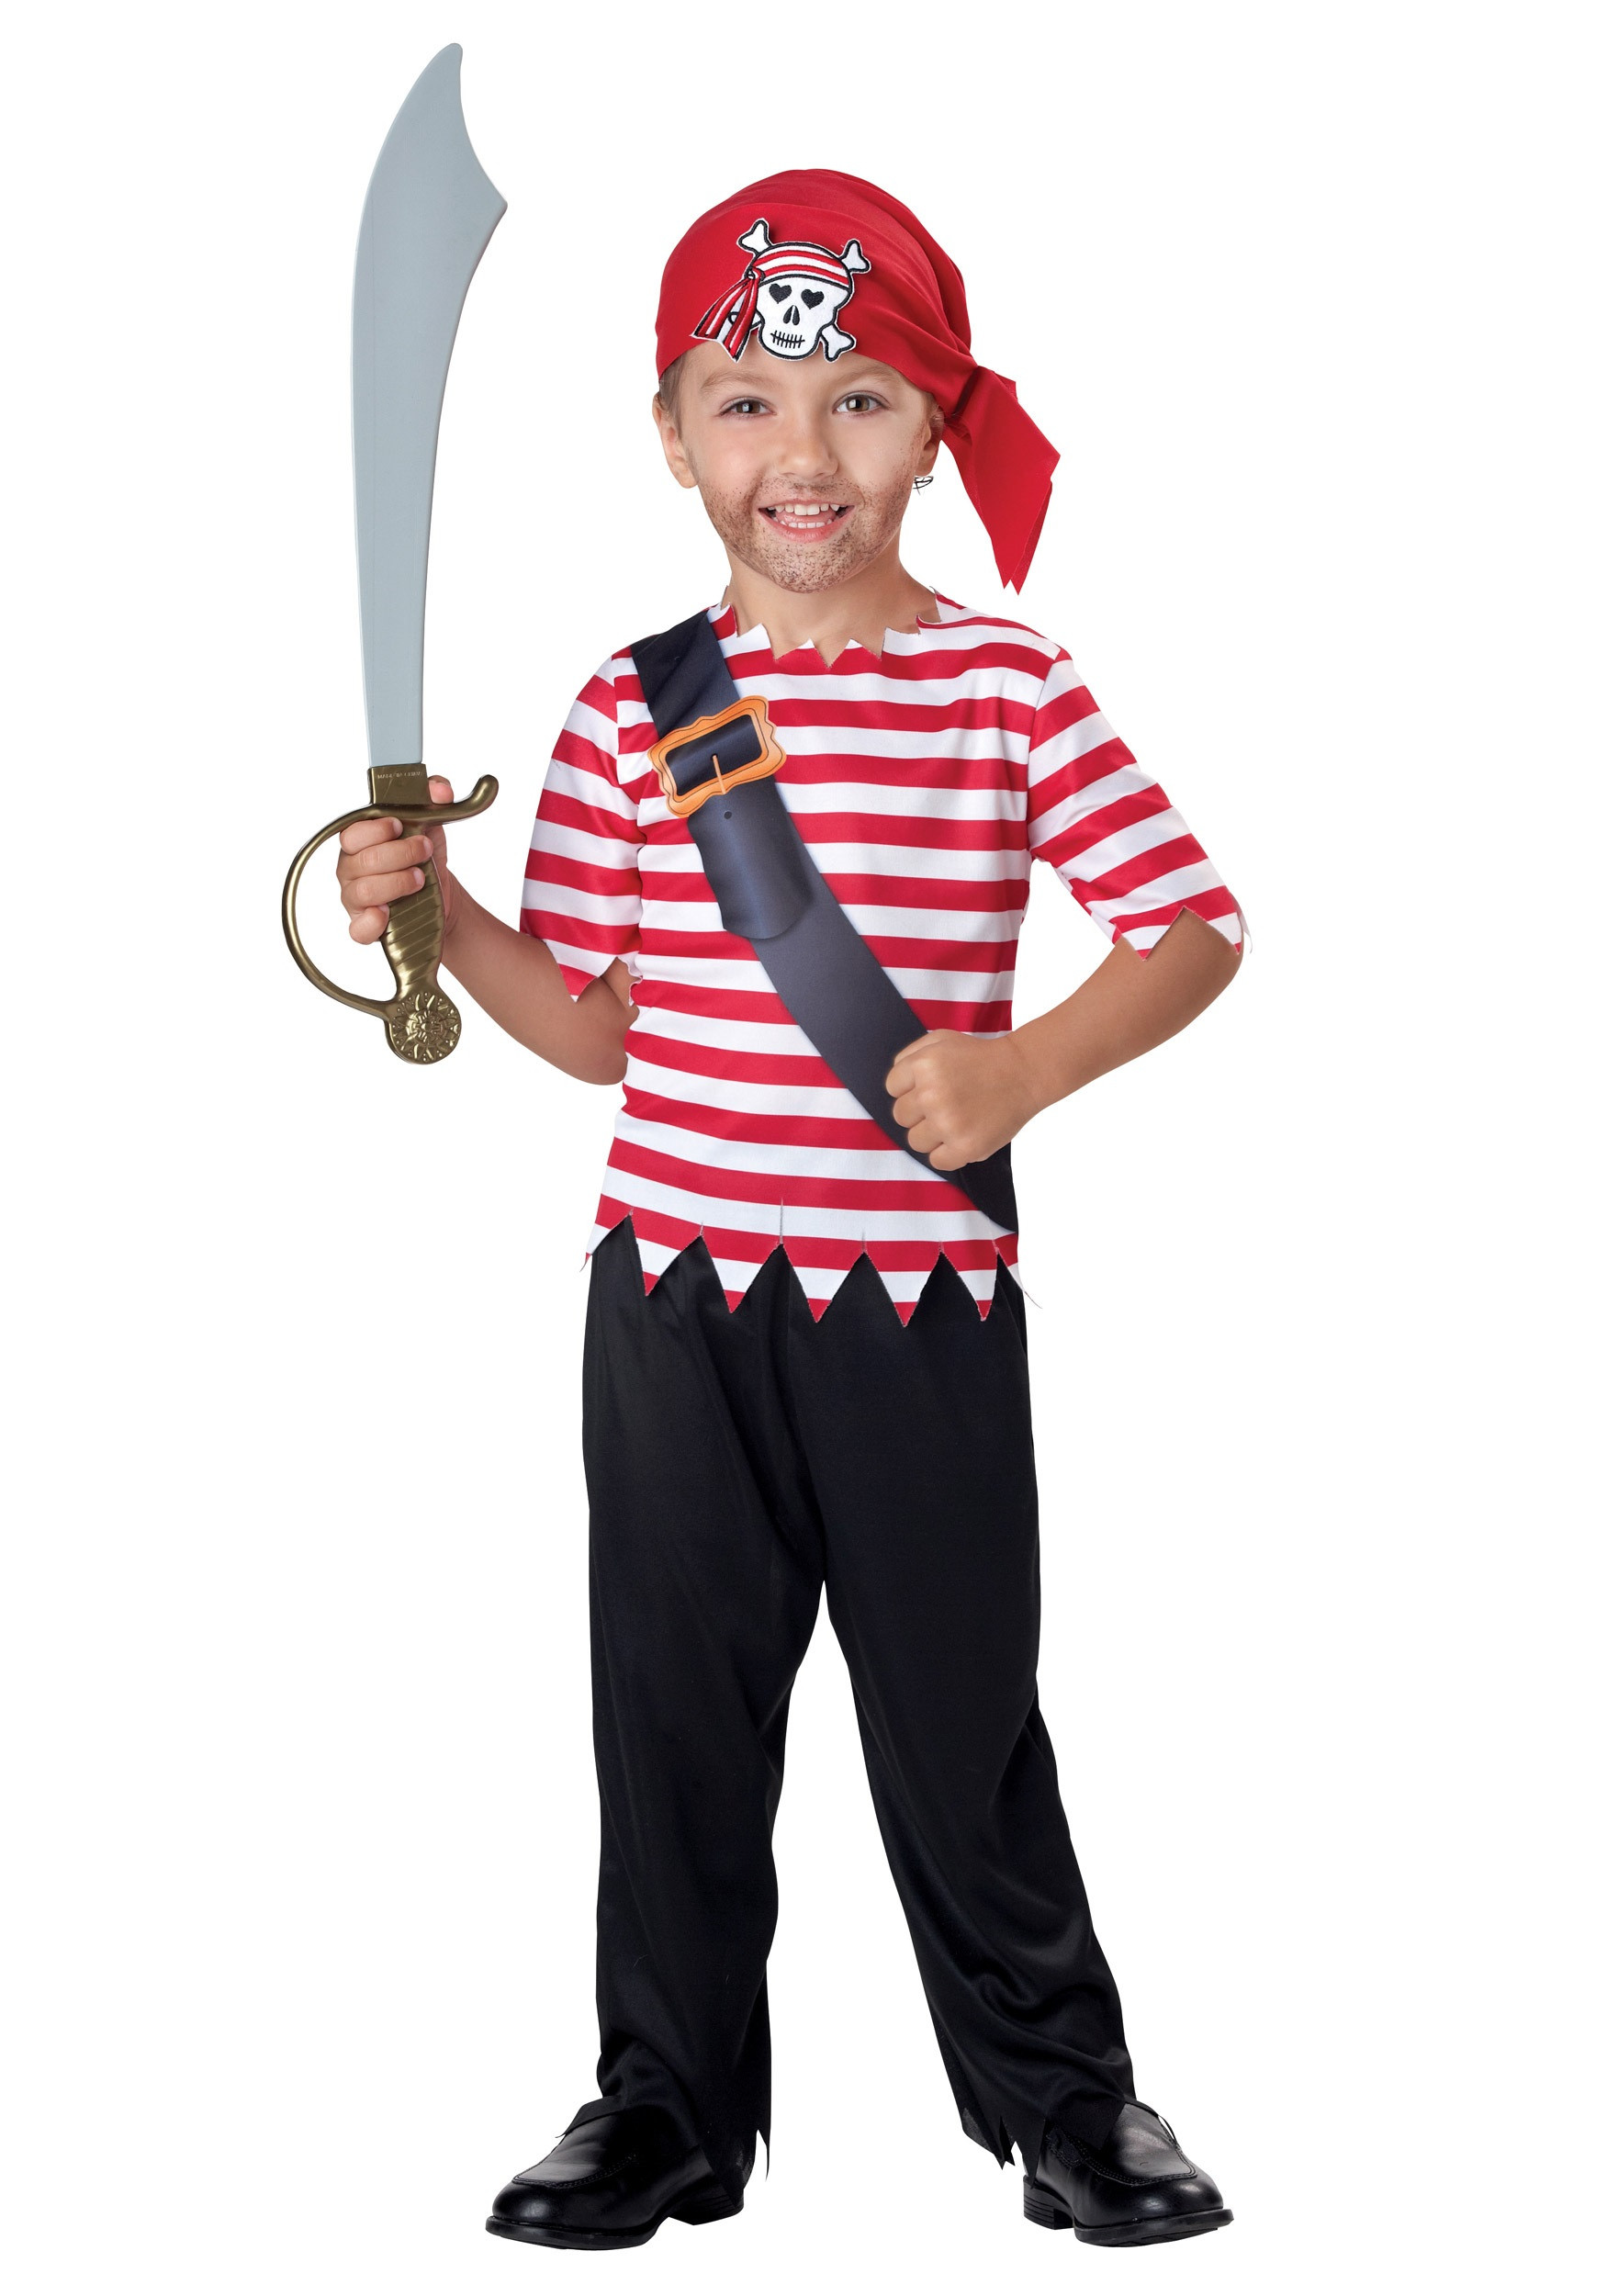 Toddler Pirate Costume DIY
 Toddler Pirate Costume